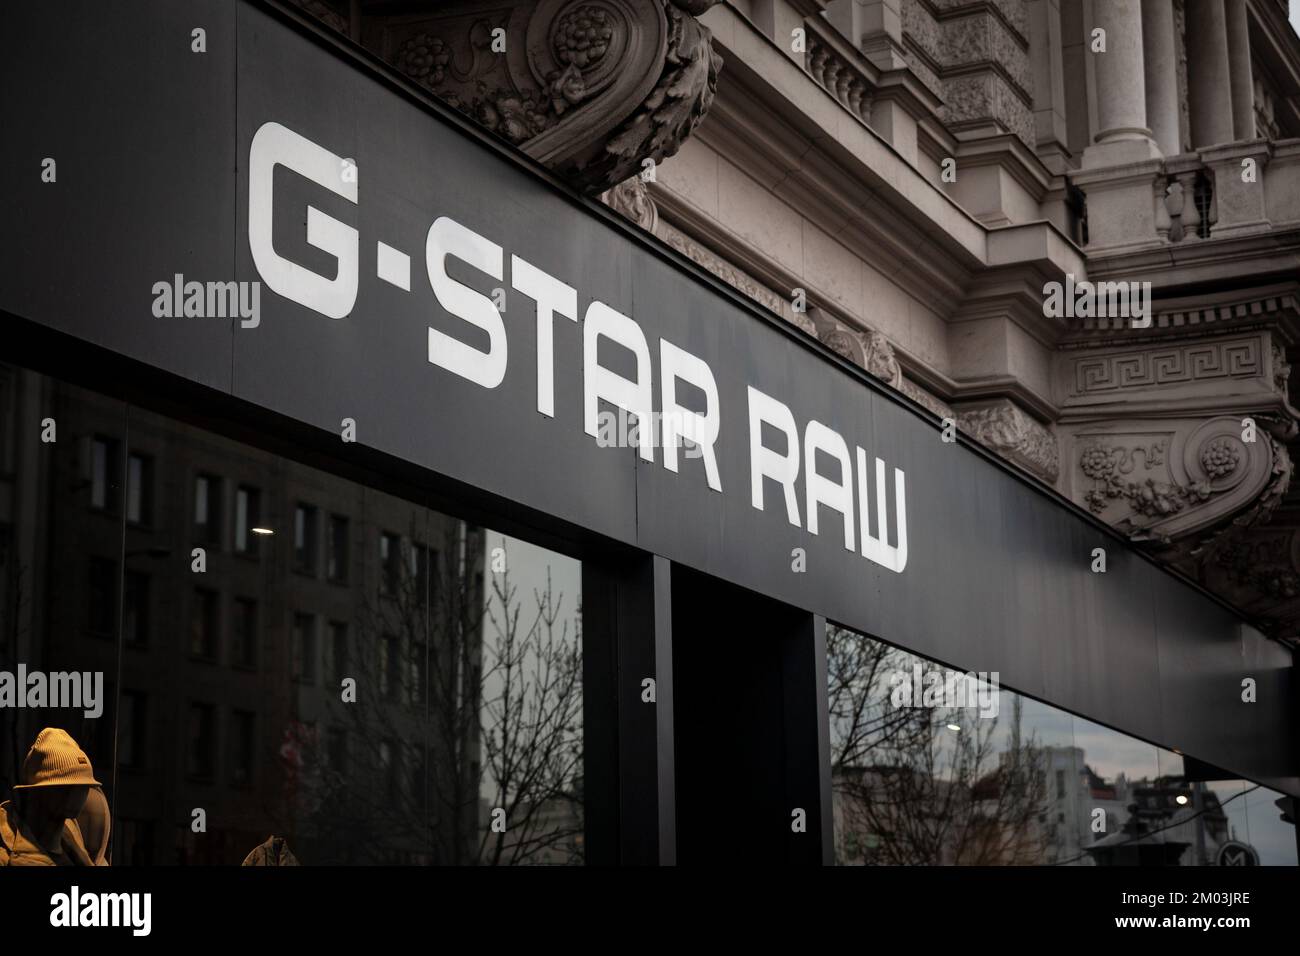 Modehaus G-Star Raw am Neumarkt, Köln, Deutschland. Modegeschaeft G-Star  Raw am Neumarkt, Köln, Deutschland Stockfotografie - Alamy